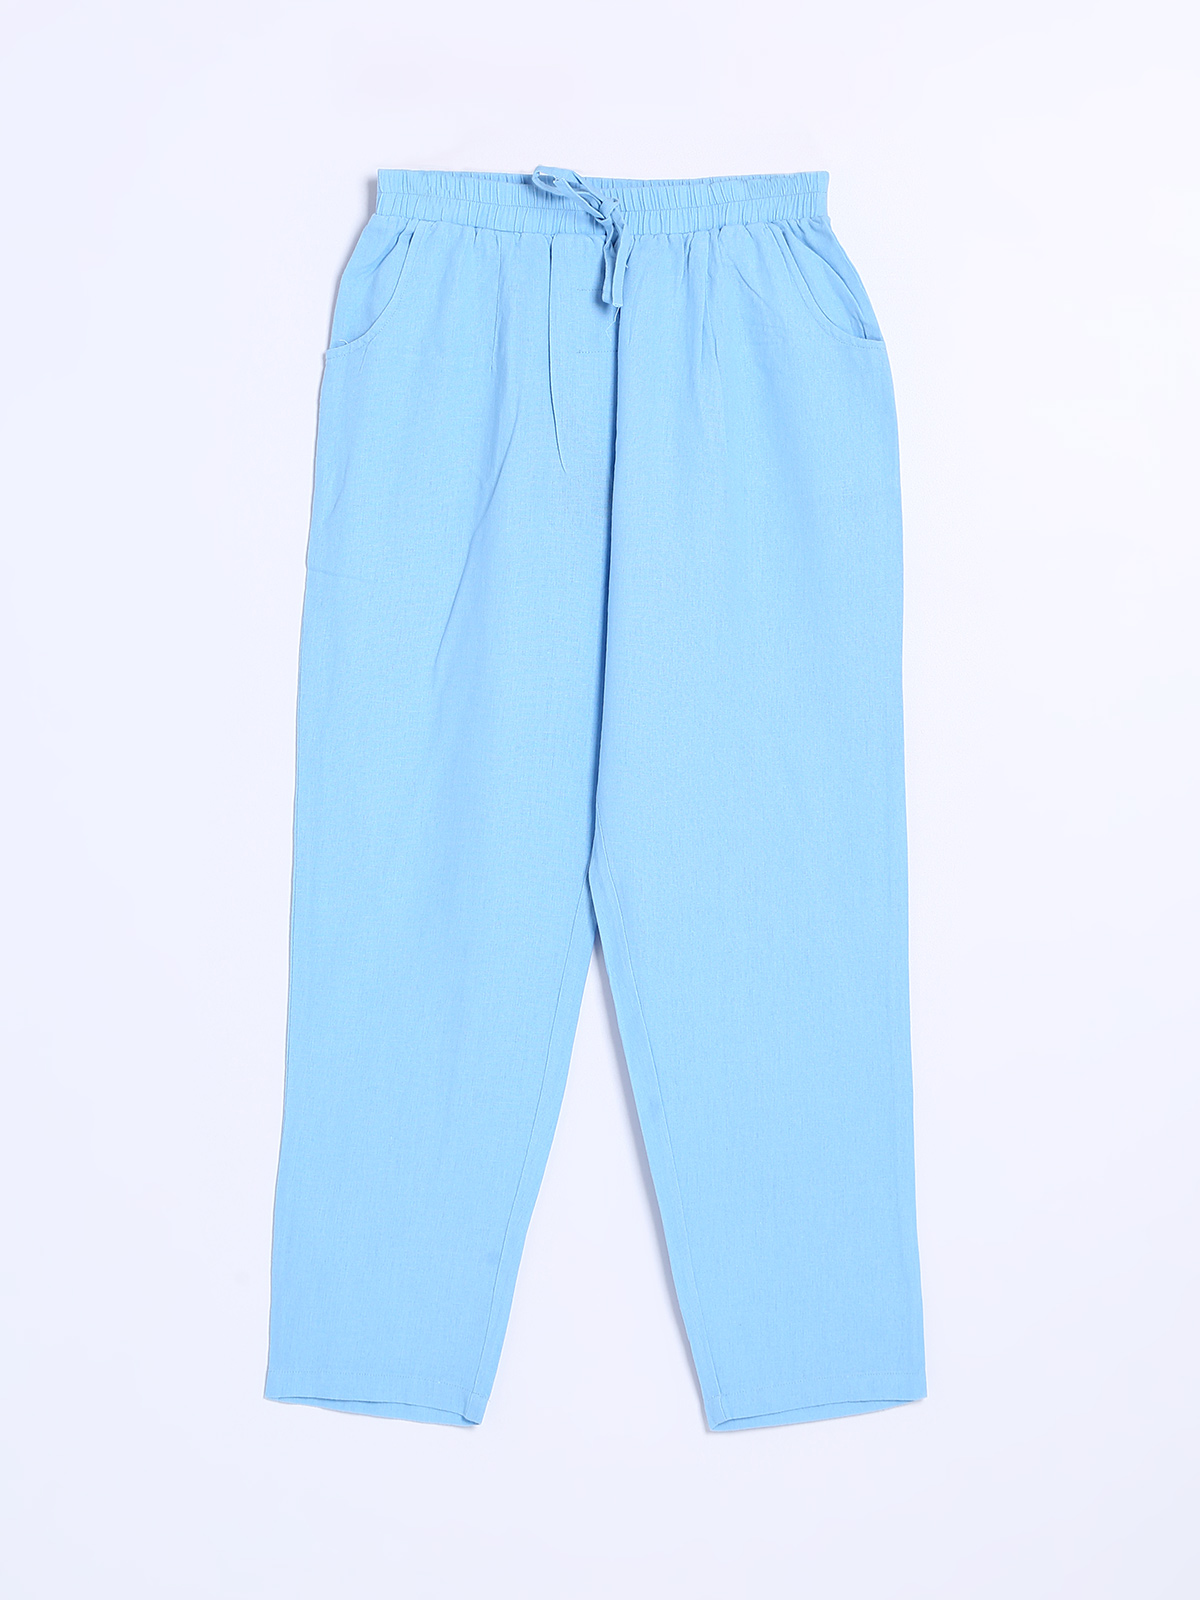 Arrow khaki solid cotton trouser - G3-MCT0747 | G3fashion.com